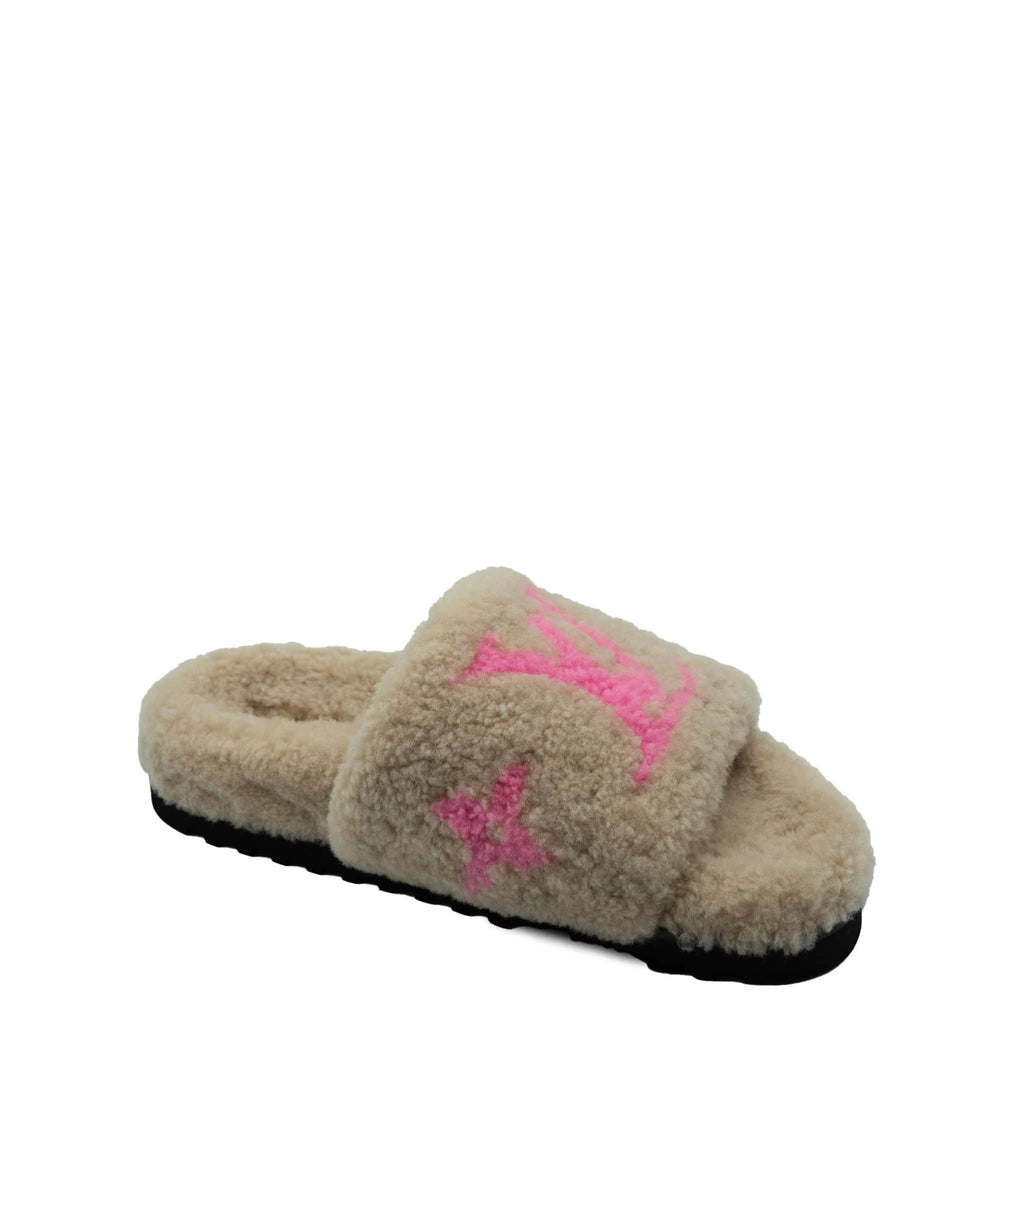 louisvuitton #slides #shoes #pink #summer